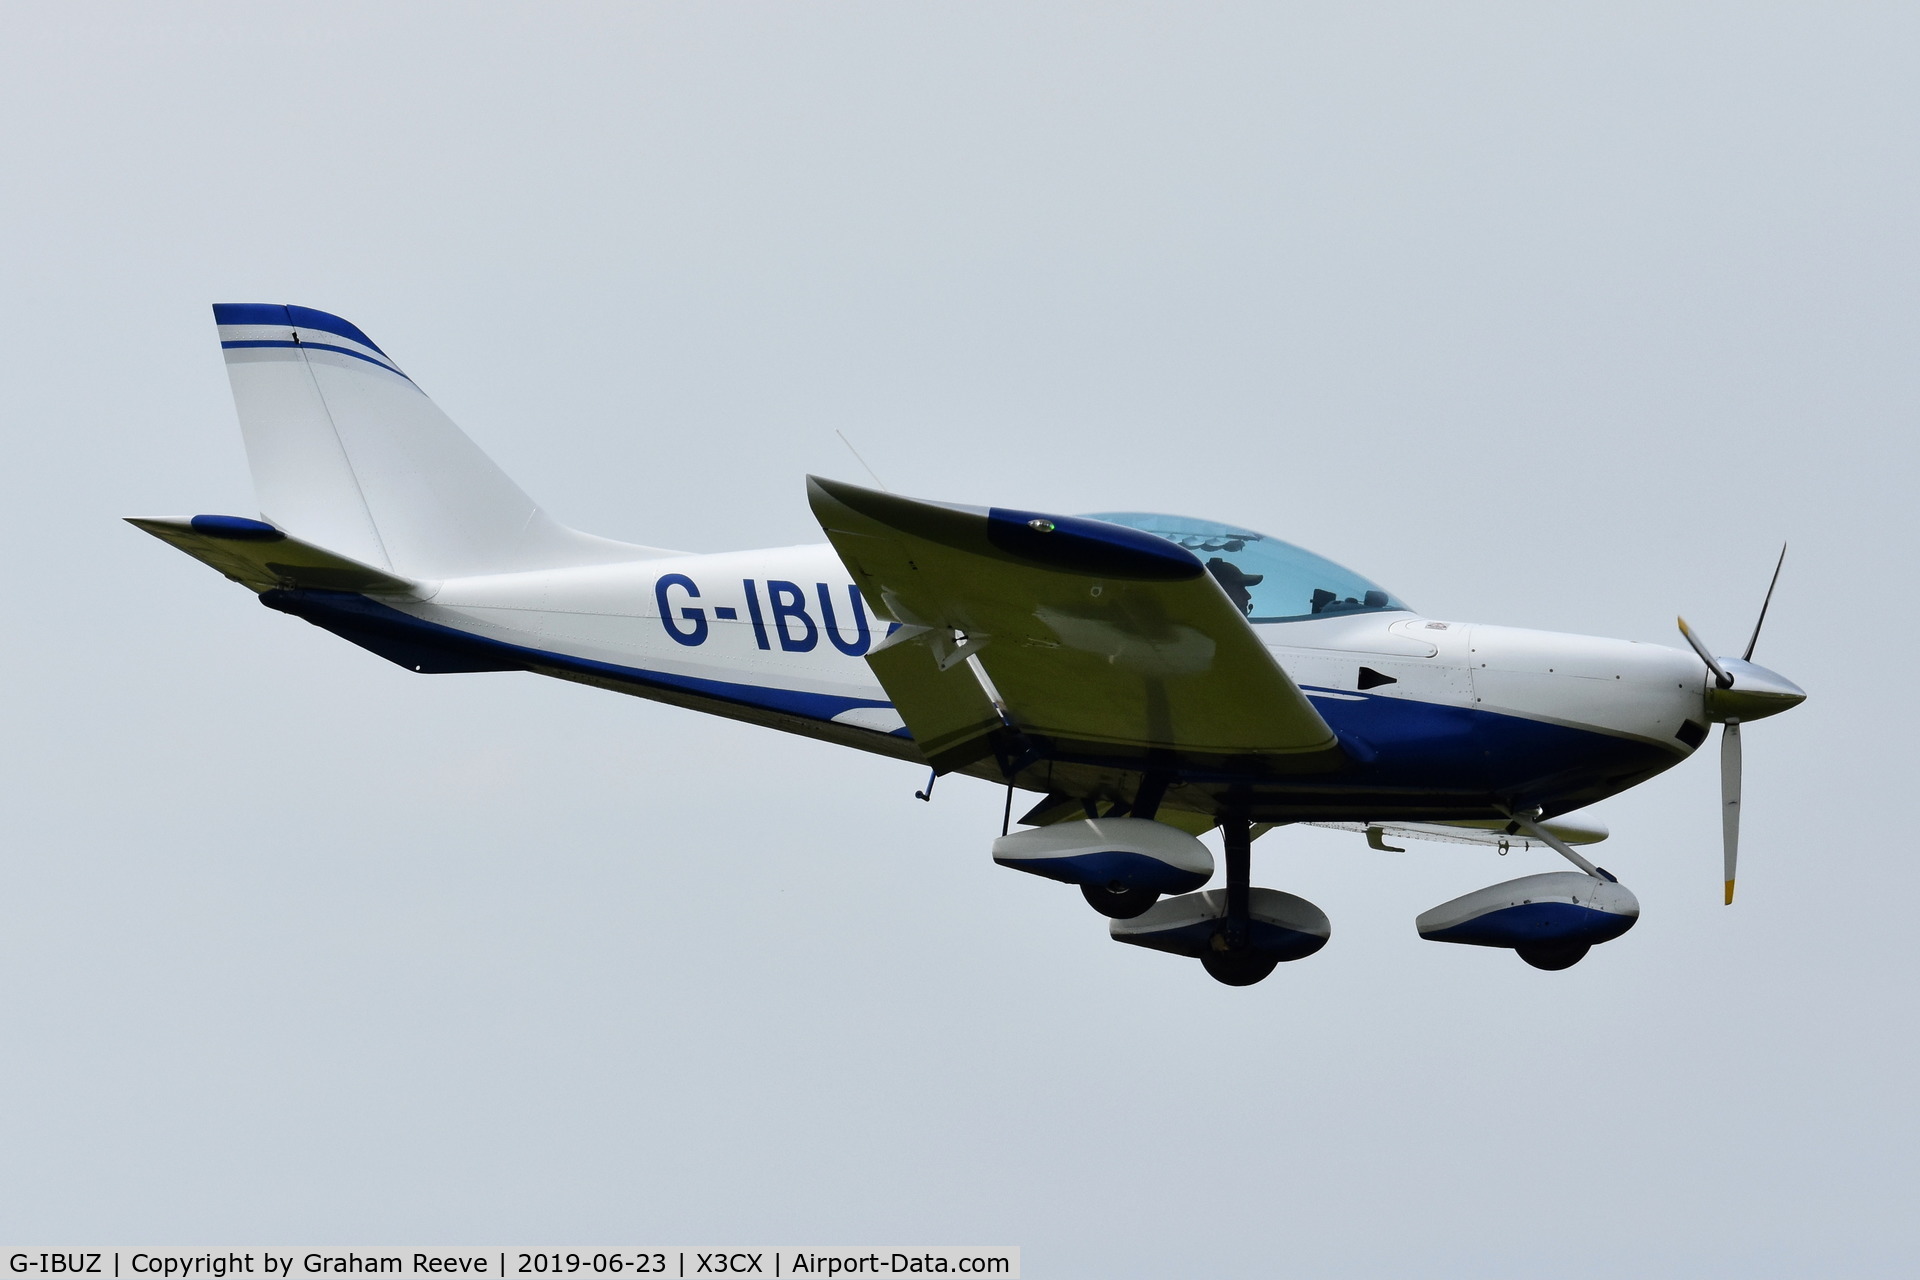 G-IBUZ, 2010 CZAW SportCruiser C/N LAA 338-14825, Landing at Northrepps.